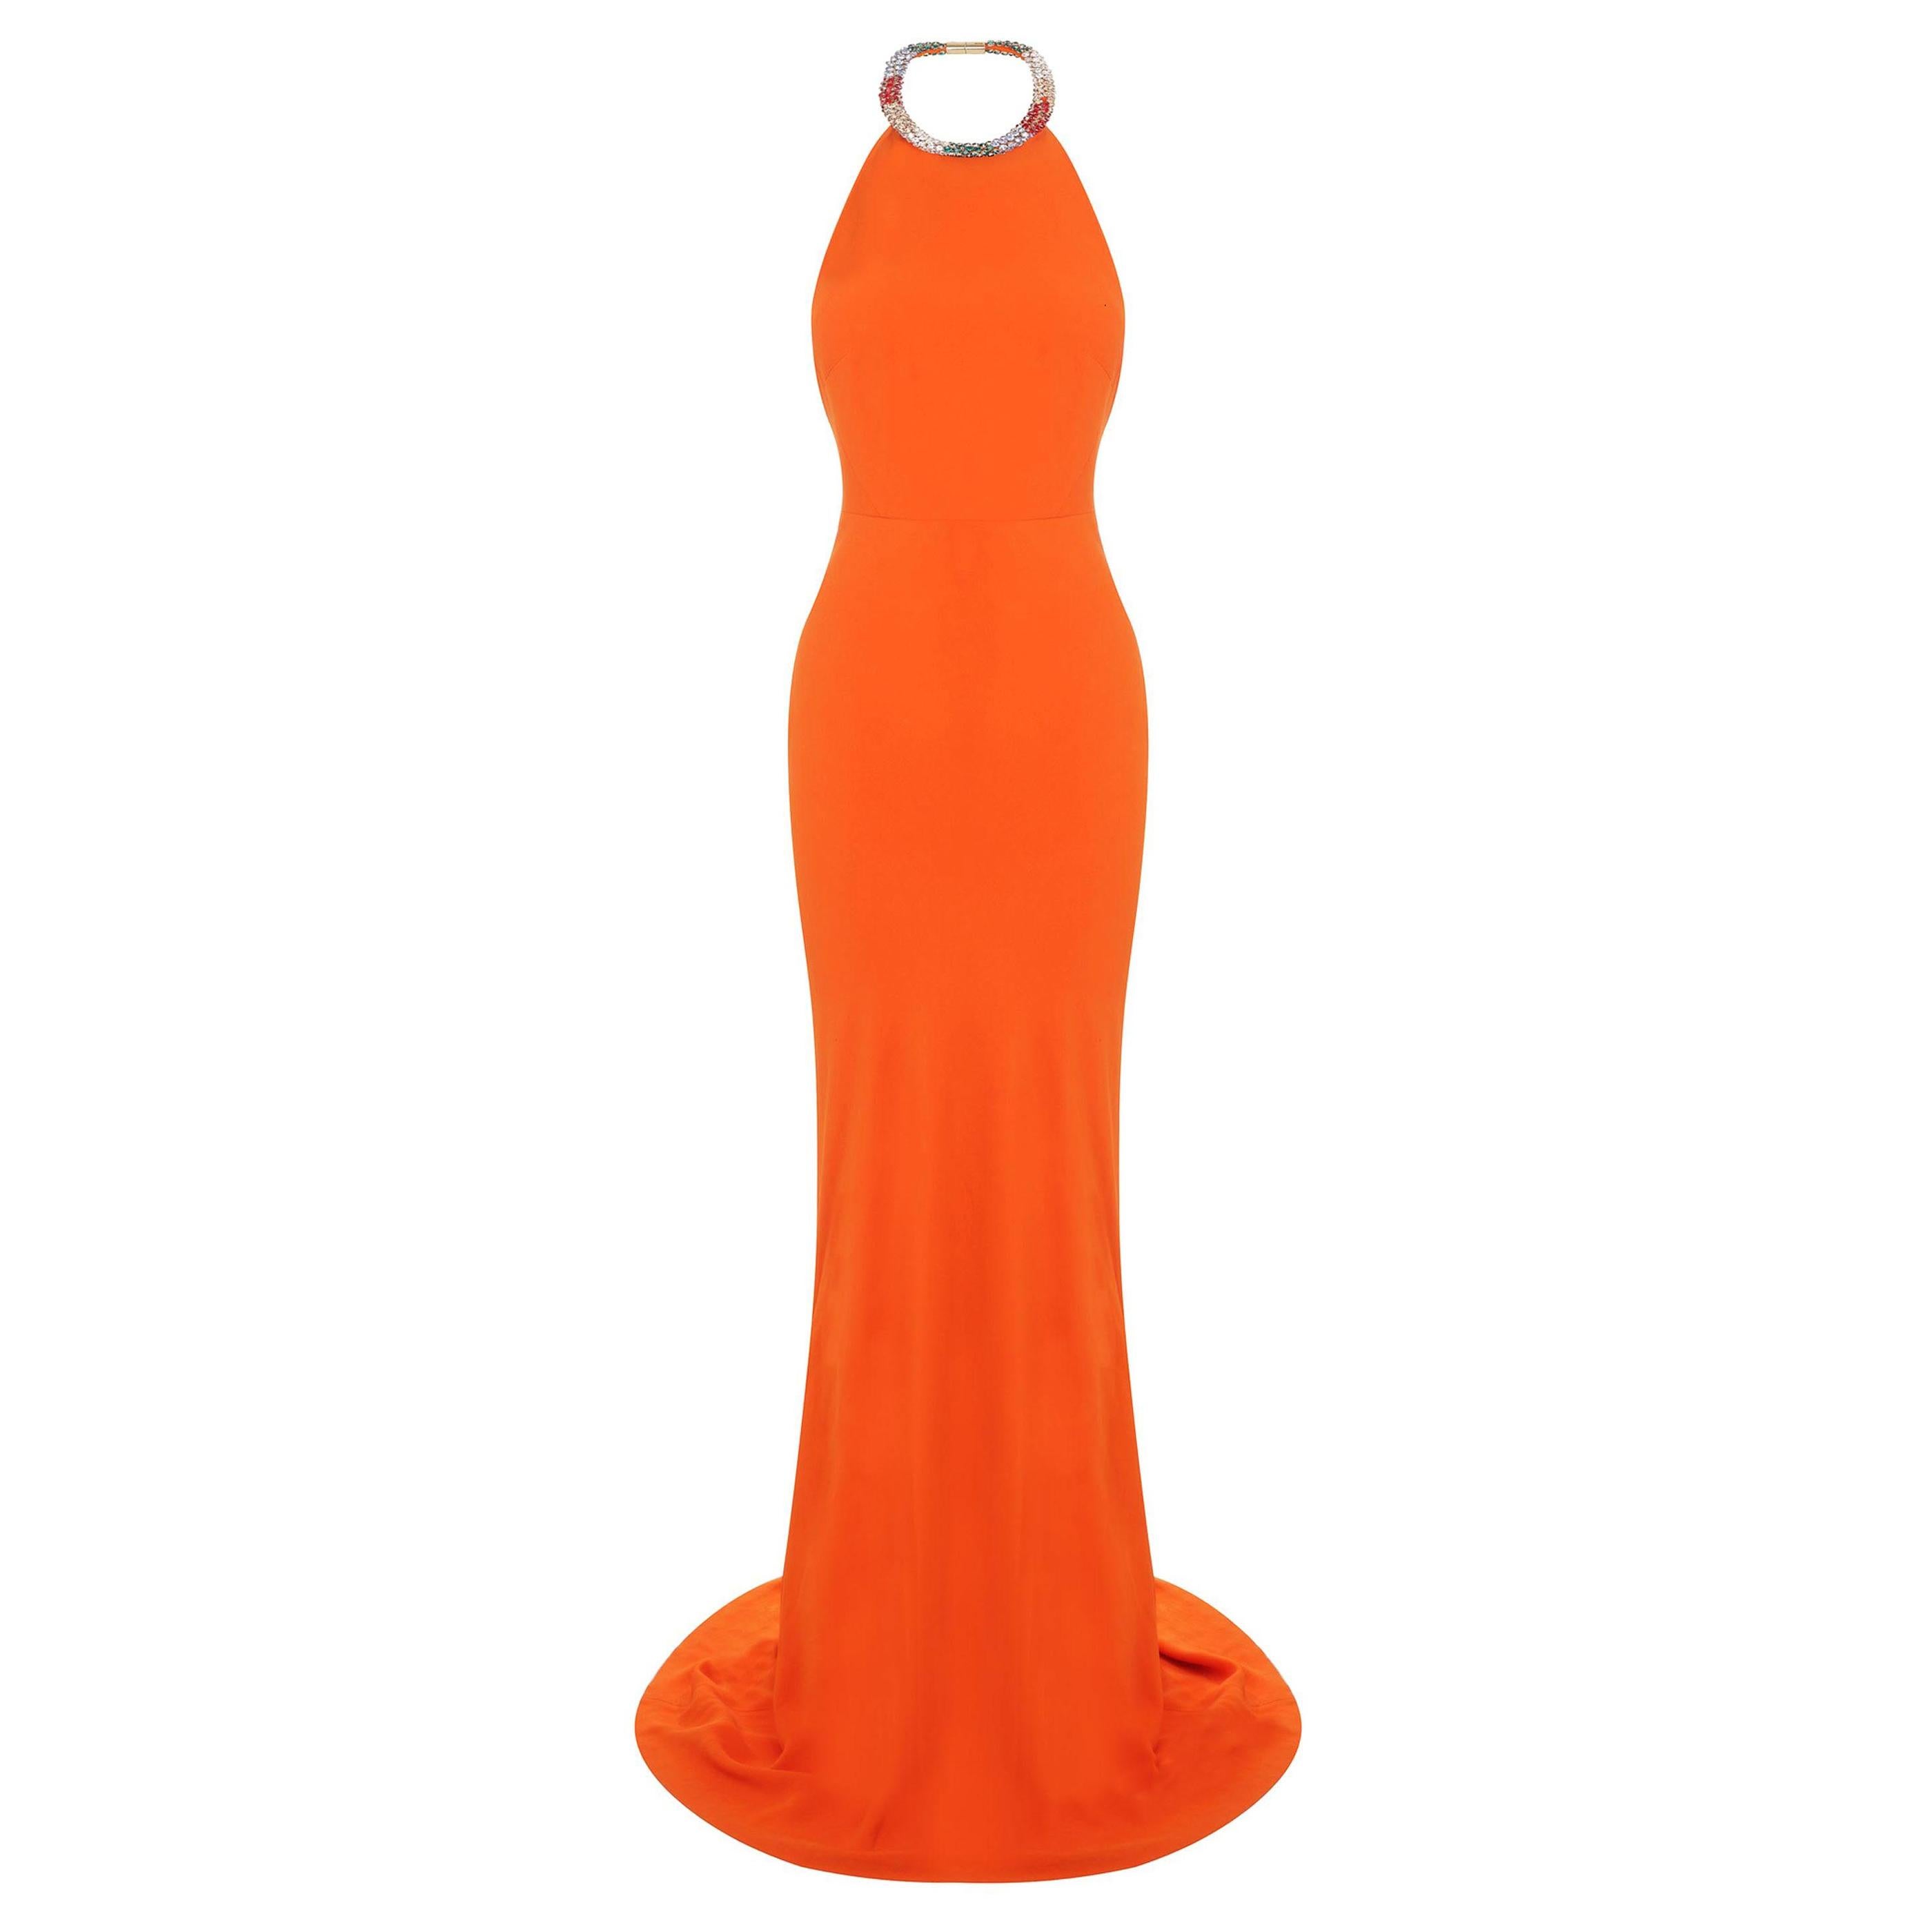 New Alexander McQueen S/S 2013 Red Carpet Jeweled Orange Halter Stretch Dress 38 For Sale